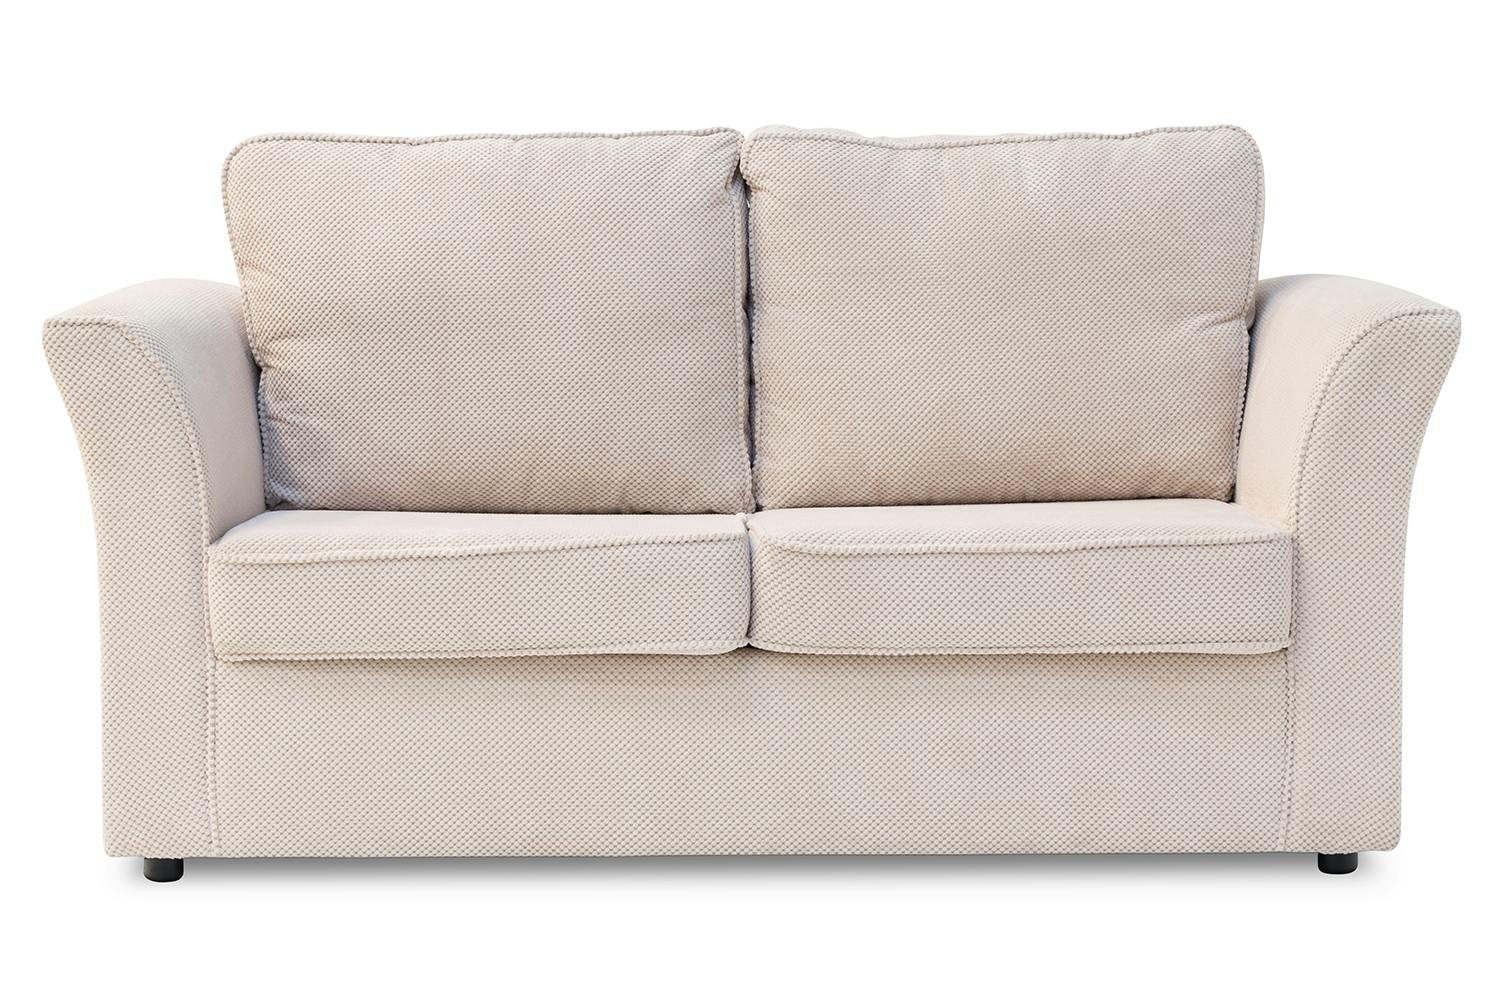 nexus sofa bed harvey norman